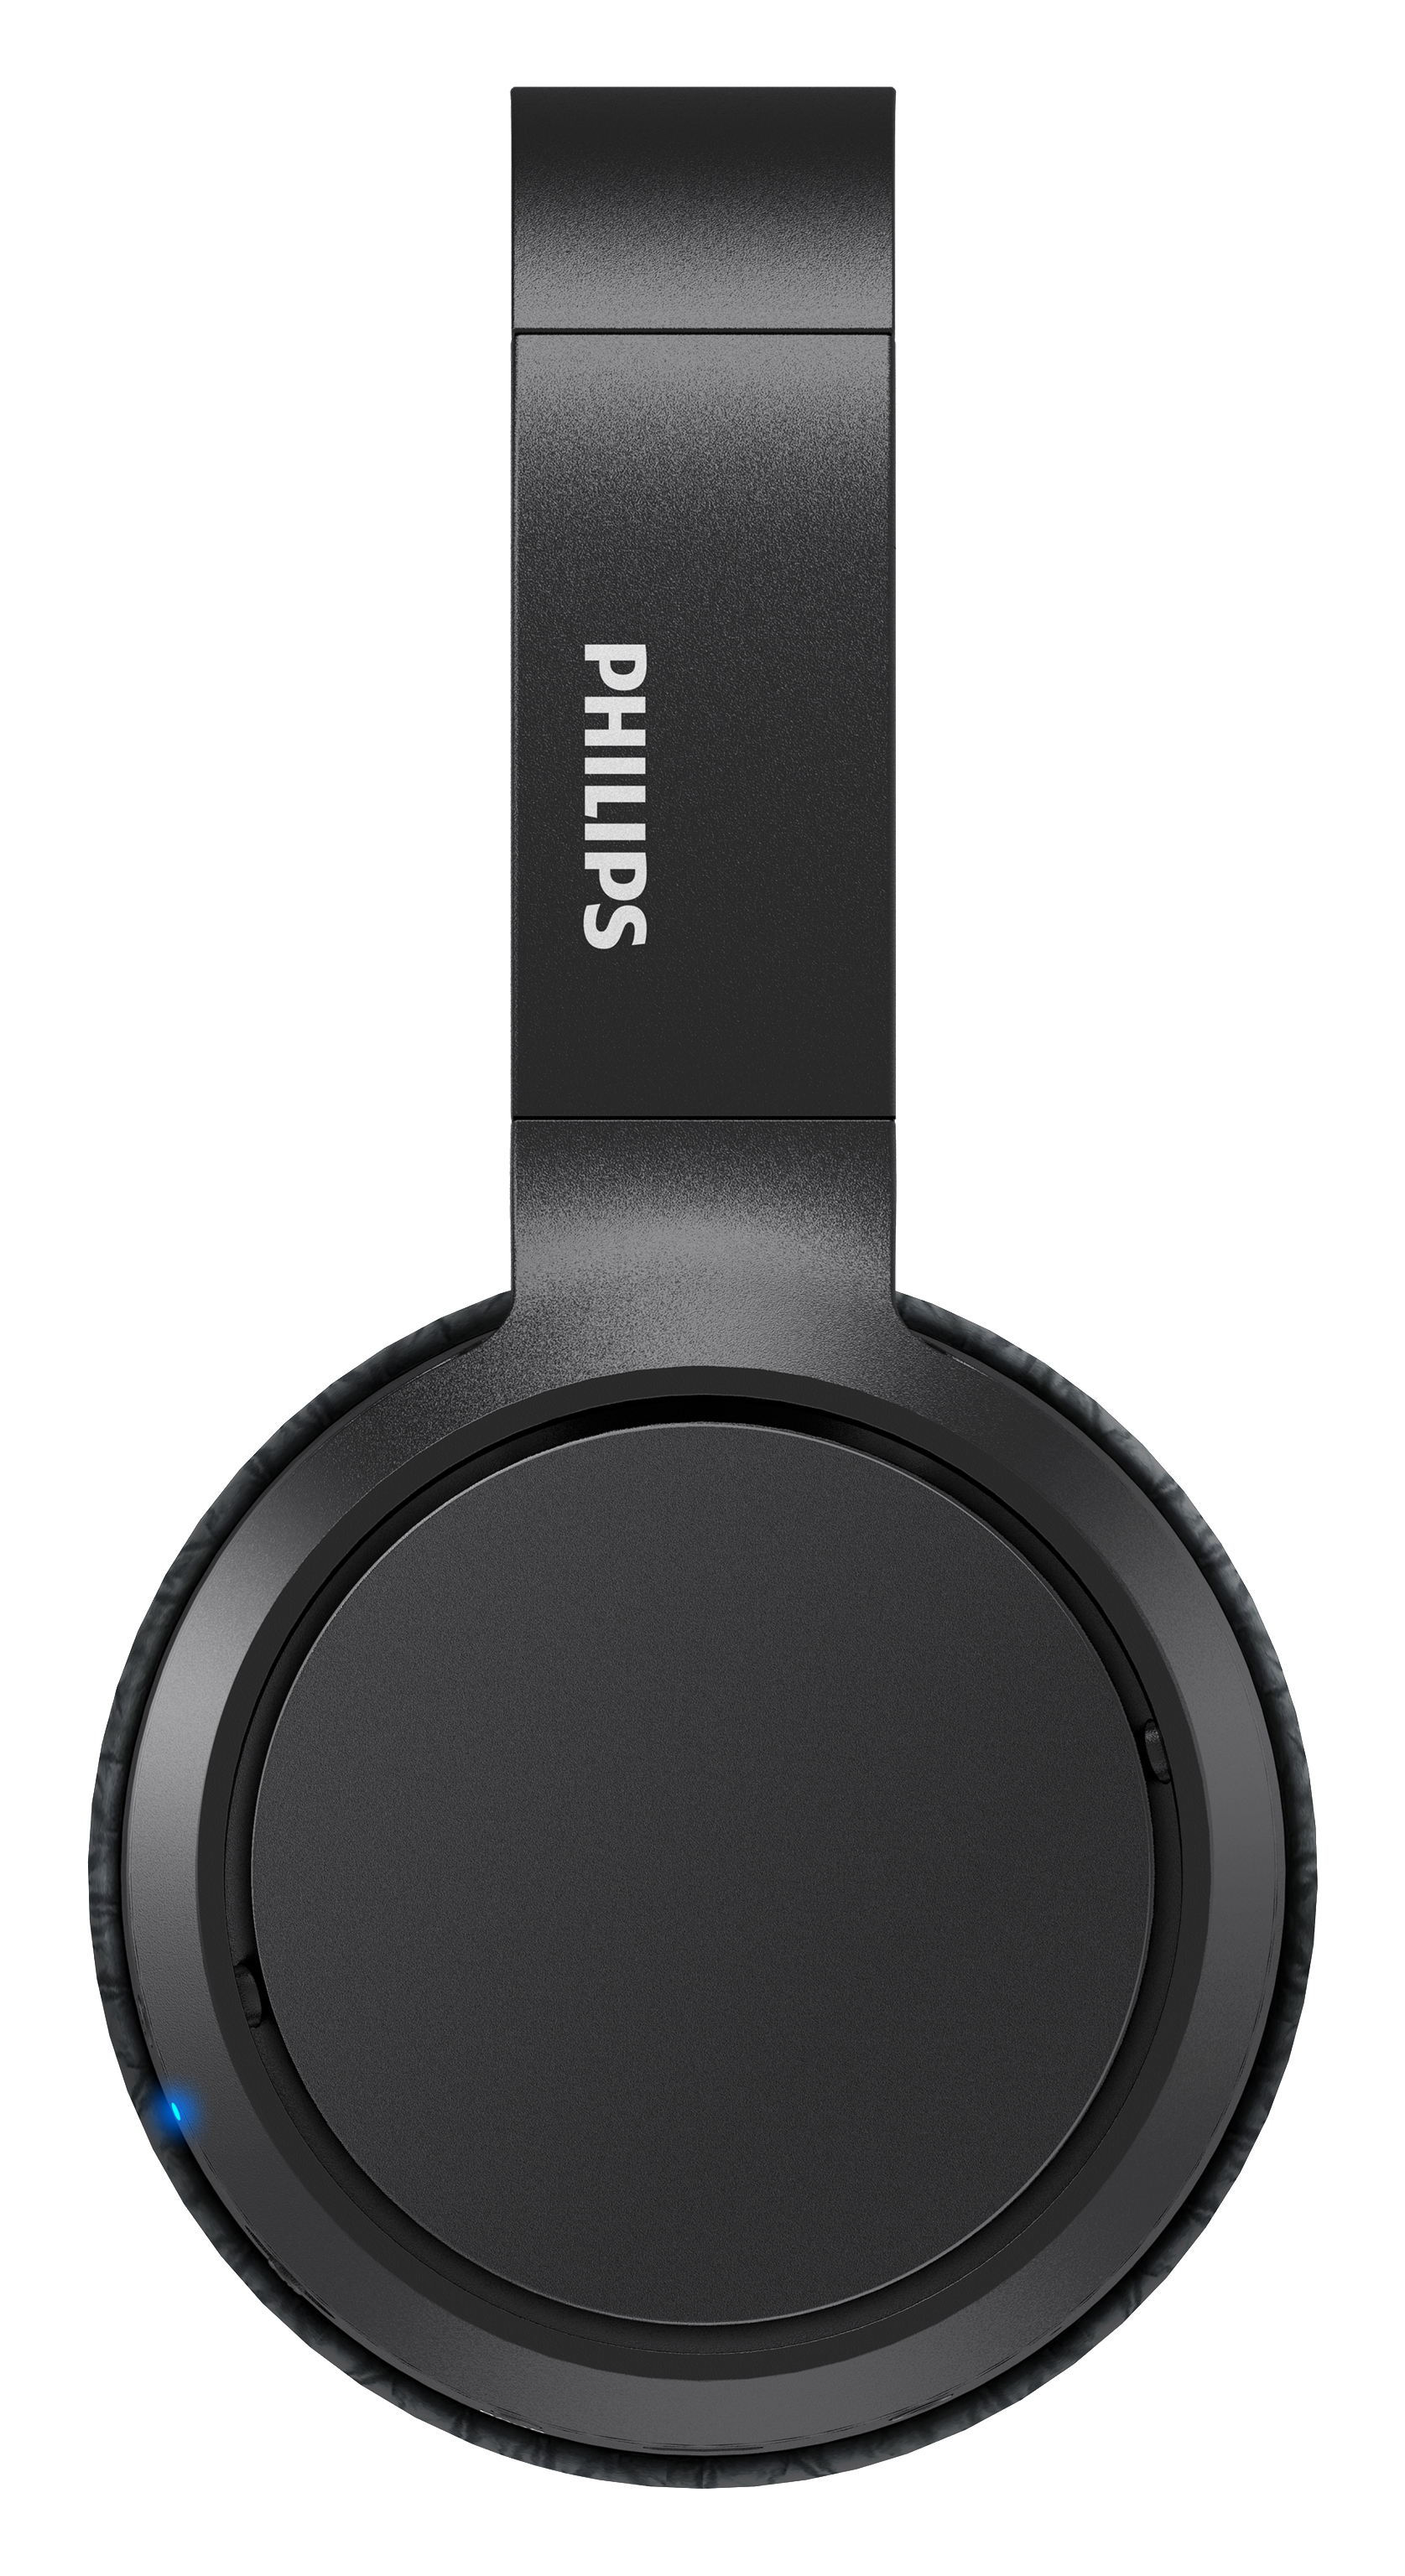 PHILIPS TAH5205BK/00, Over-ear Kopfhörer Schwarz Bluetooth